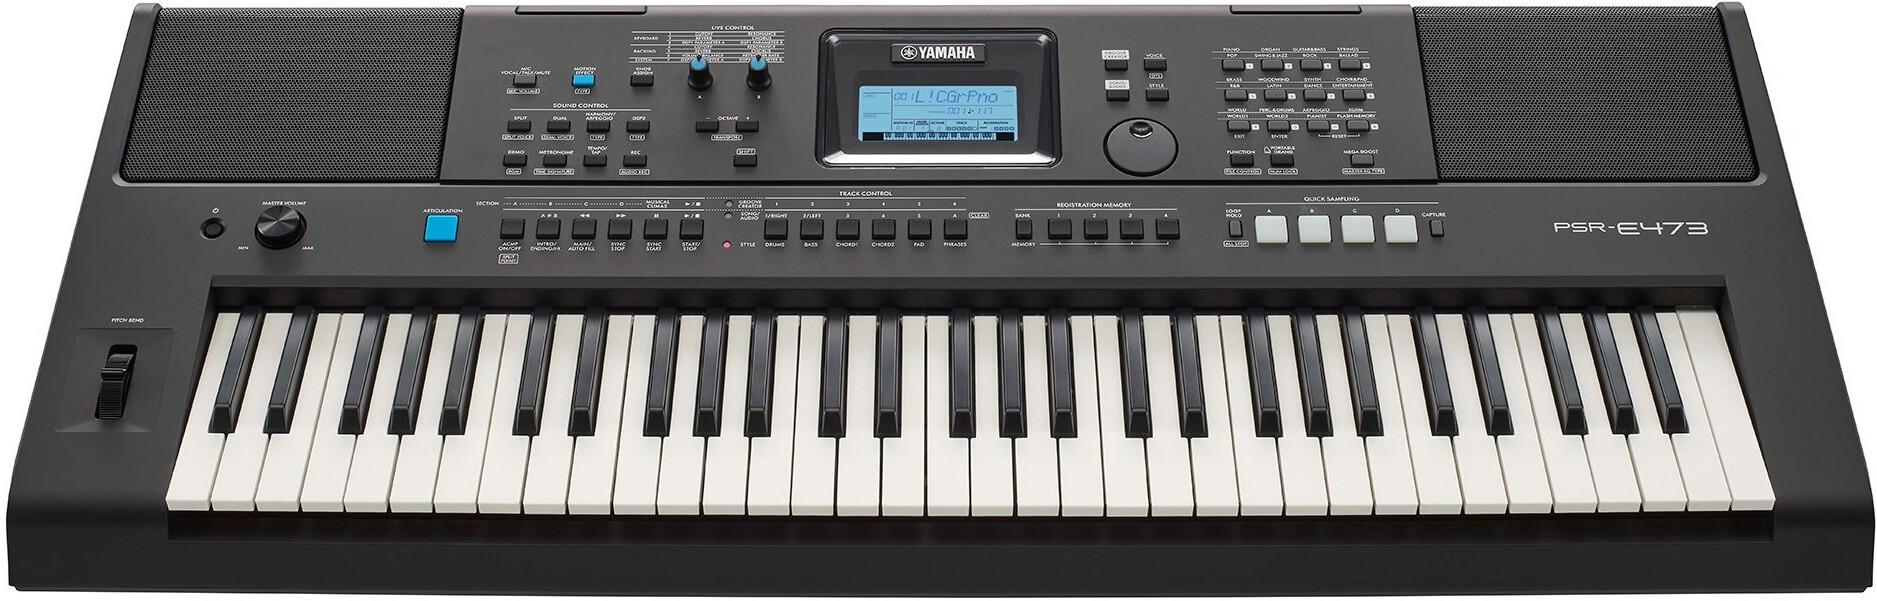 Цифровой синтезатор Yamaha PSR-E473 без блока питания